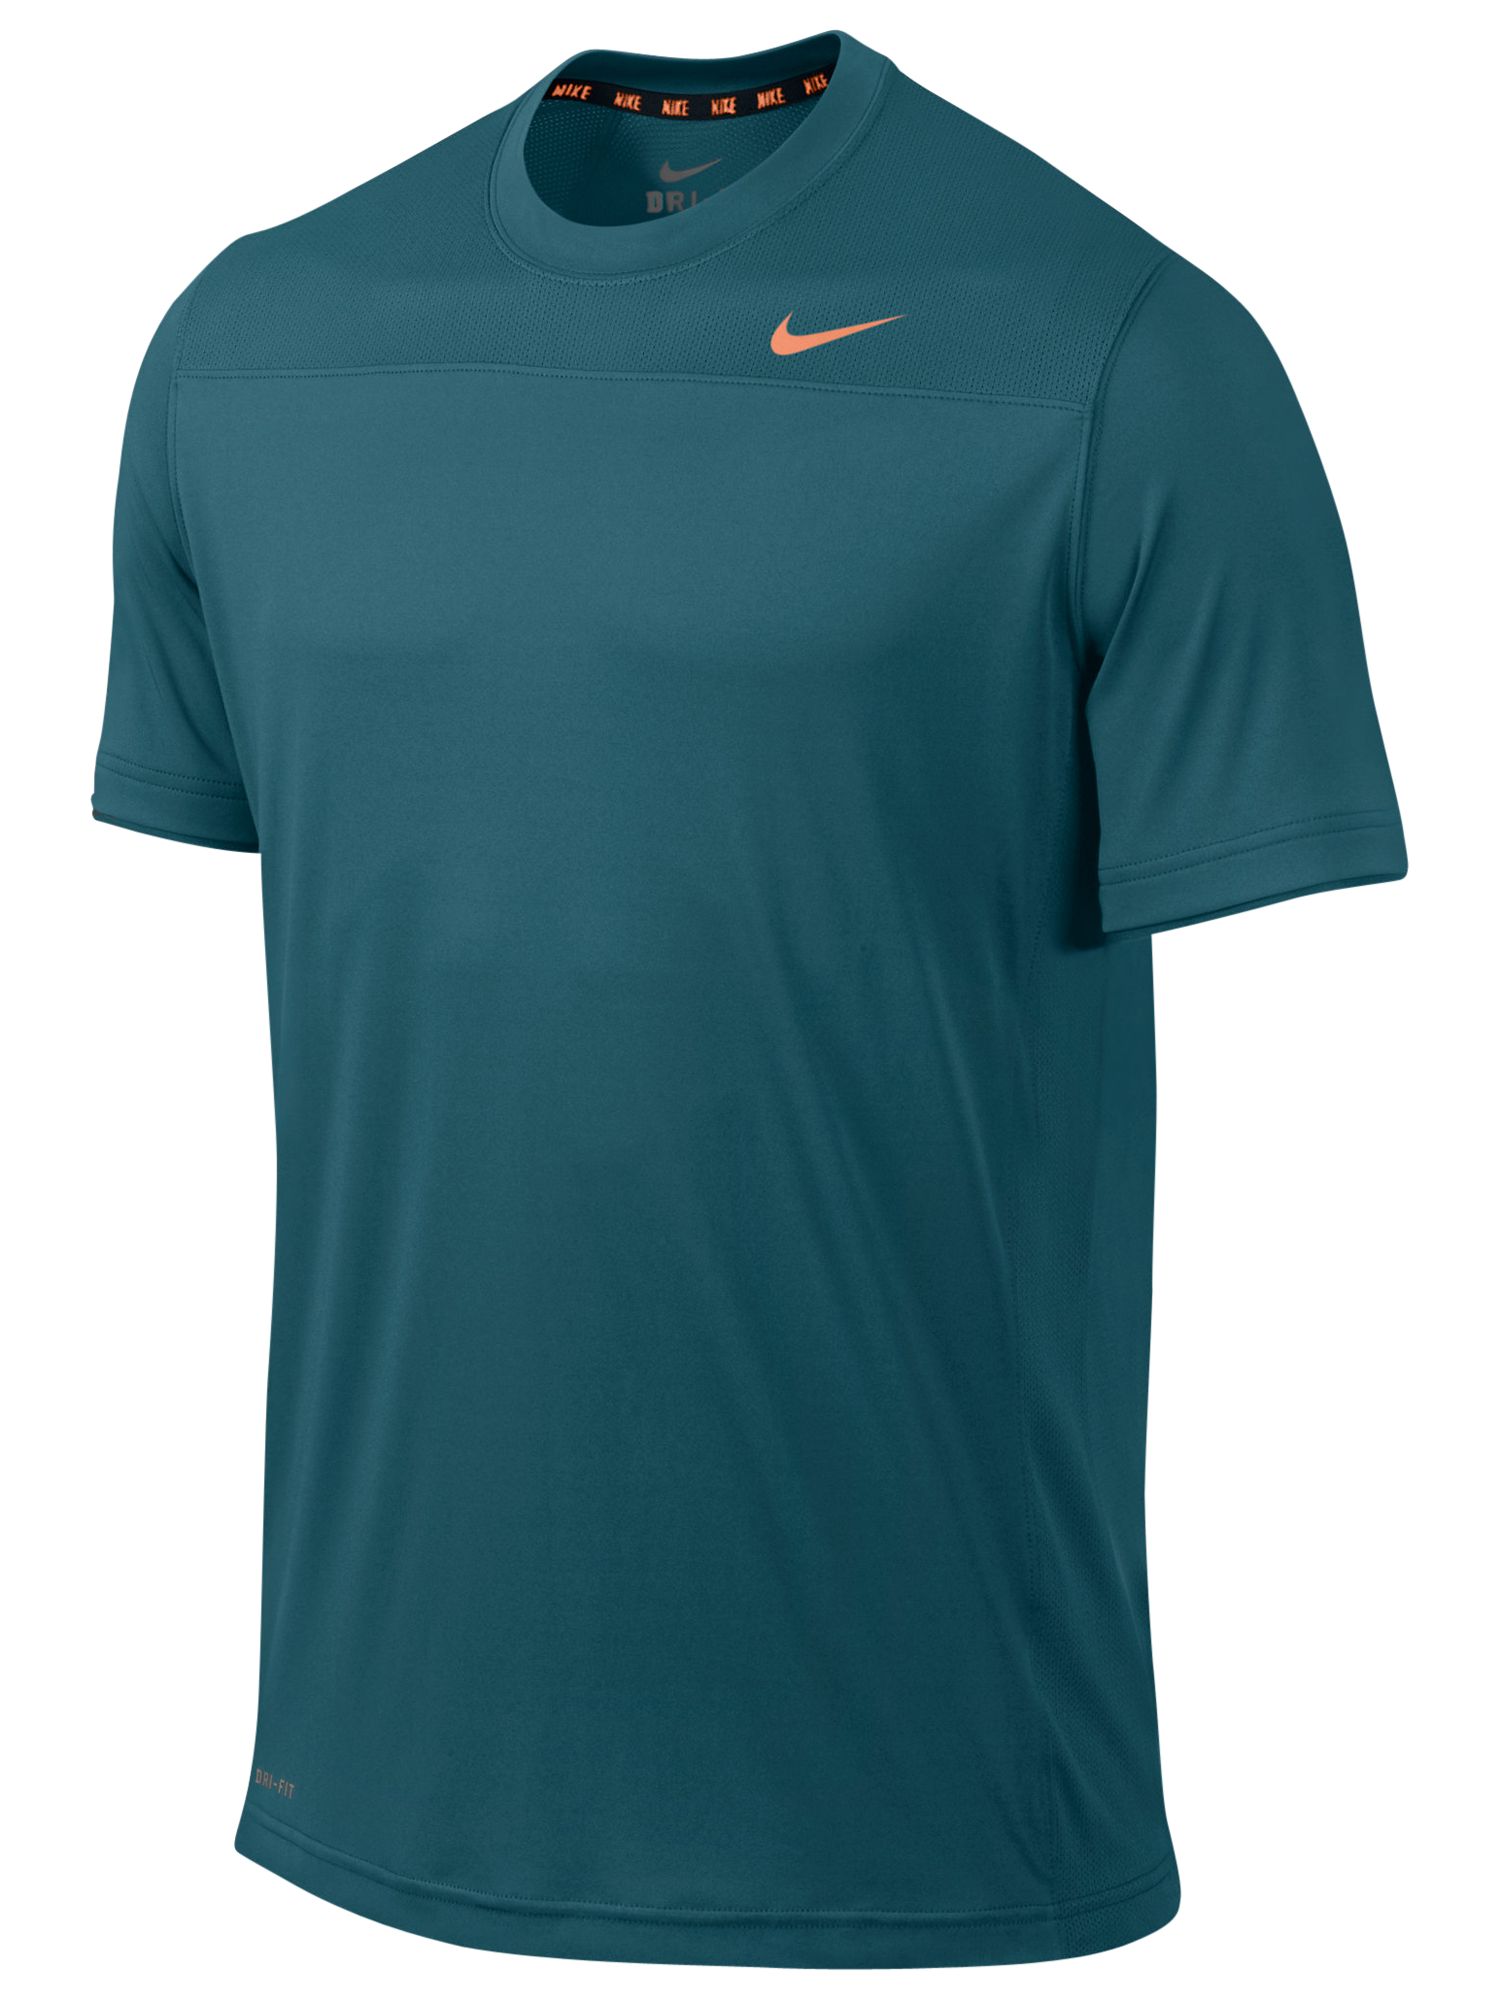 Nike Hyperspeed Short Sleeve T-Shirt at John Lewis & Partners